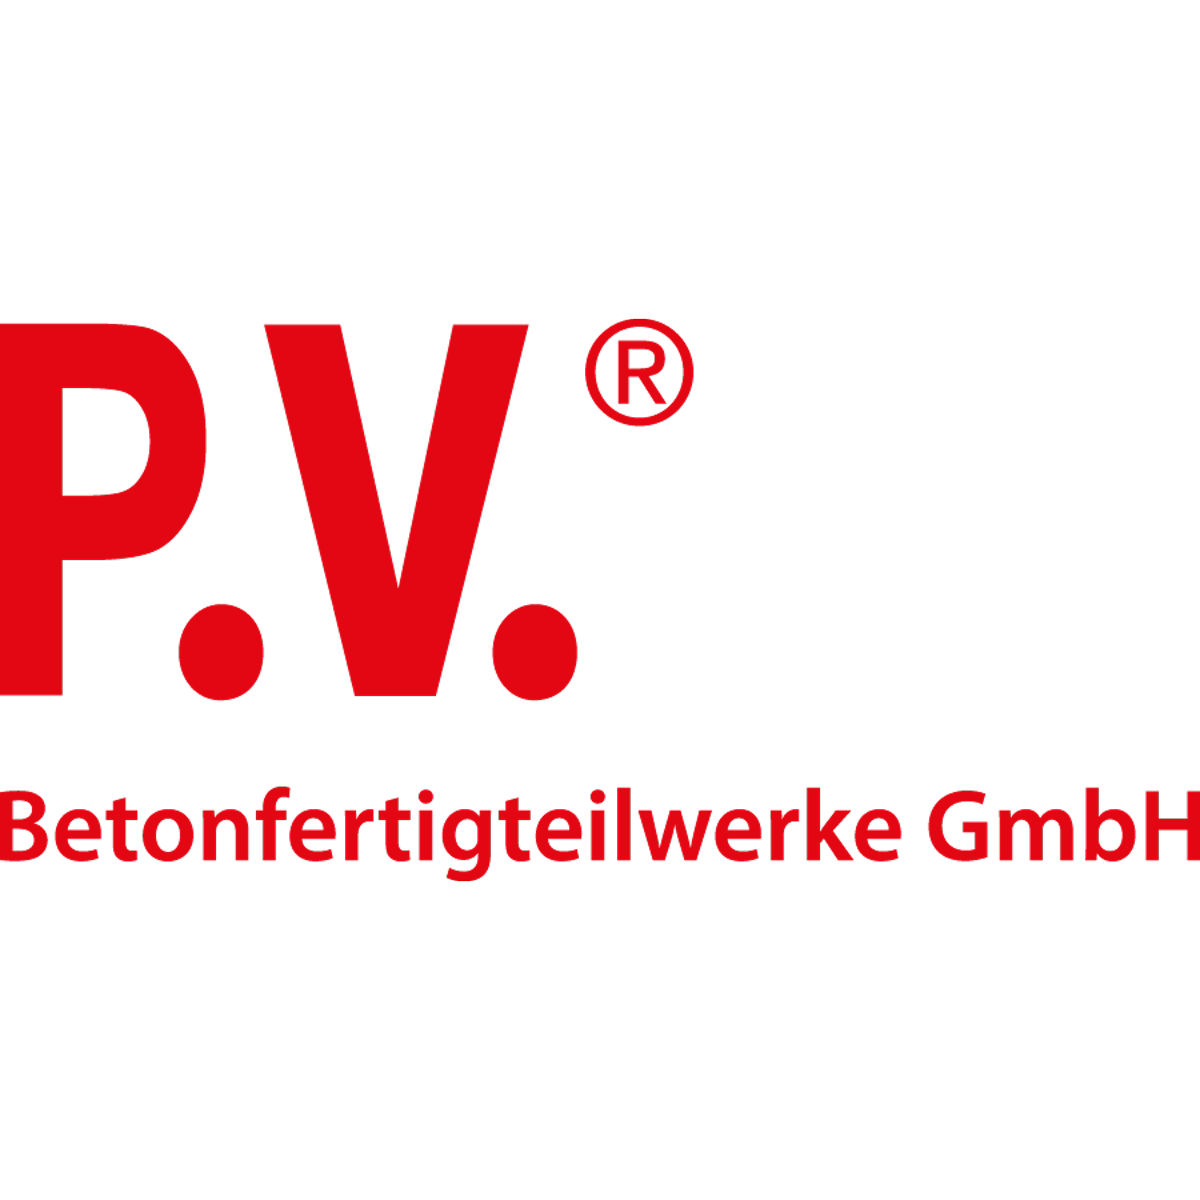 P.V. Betonfertigteilwerke GmbH